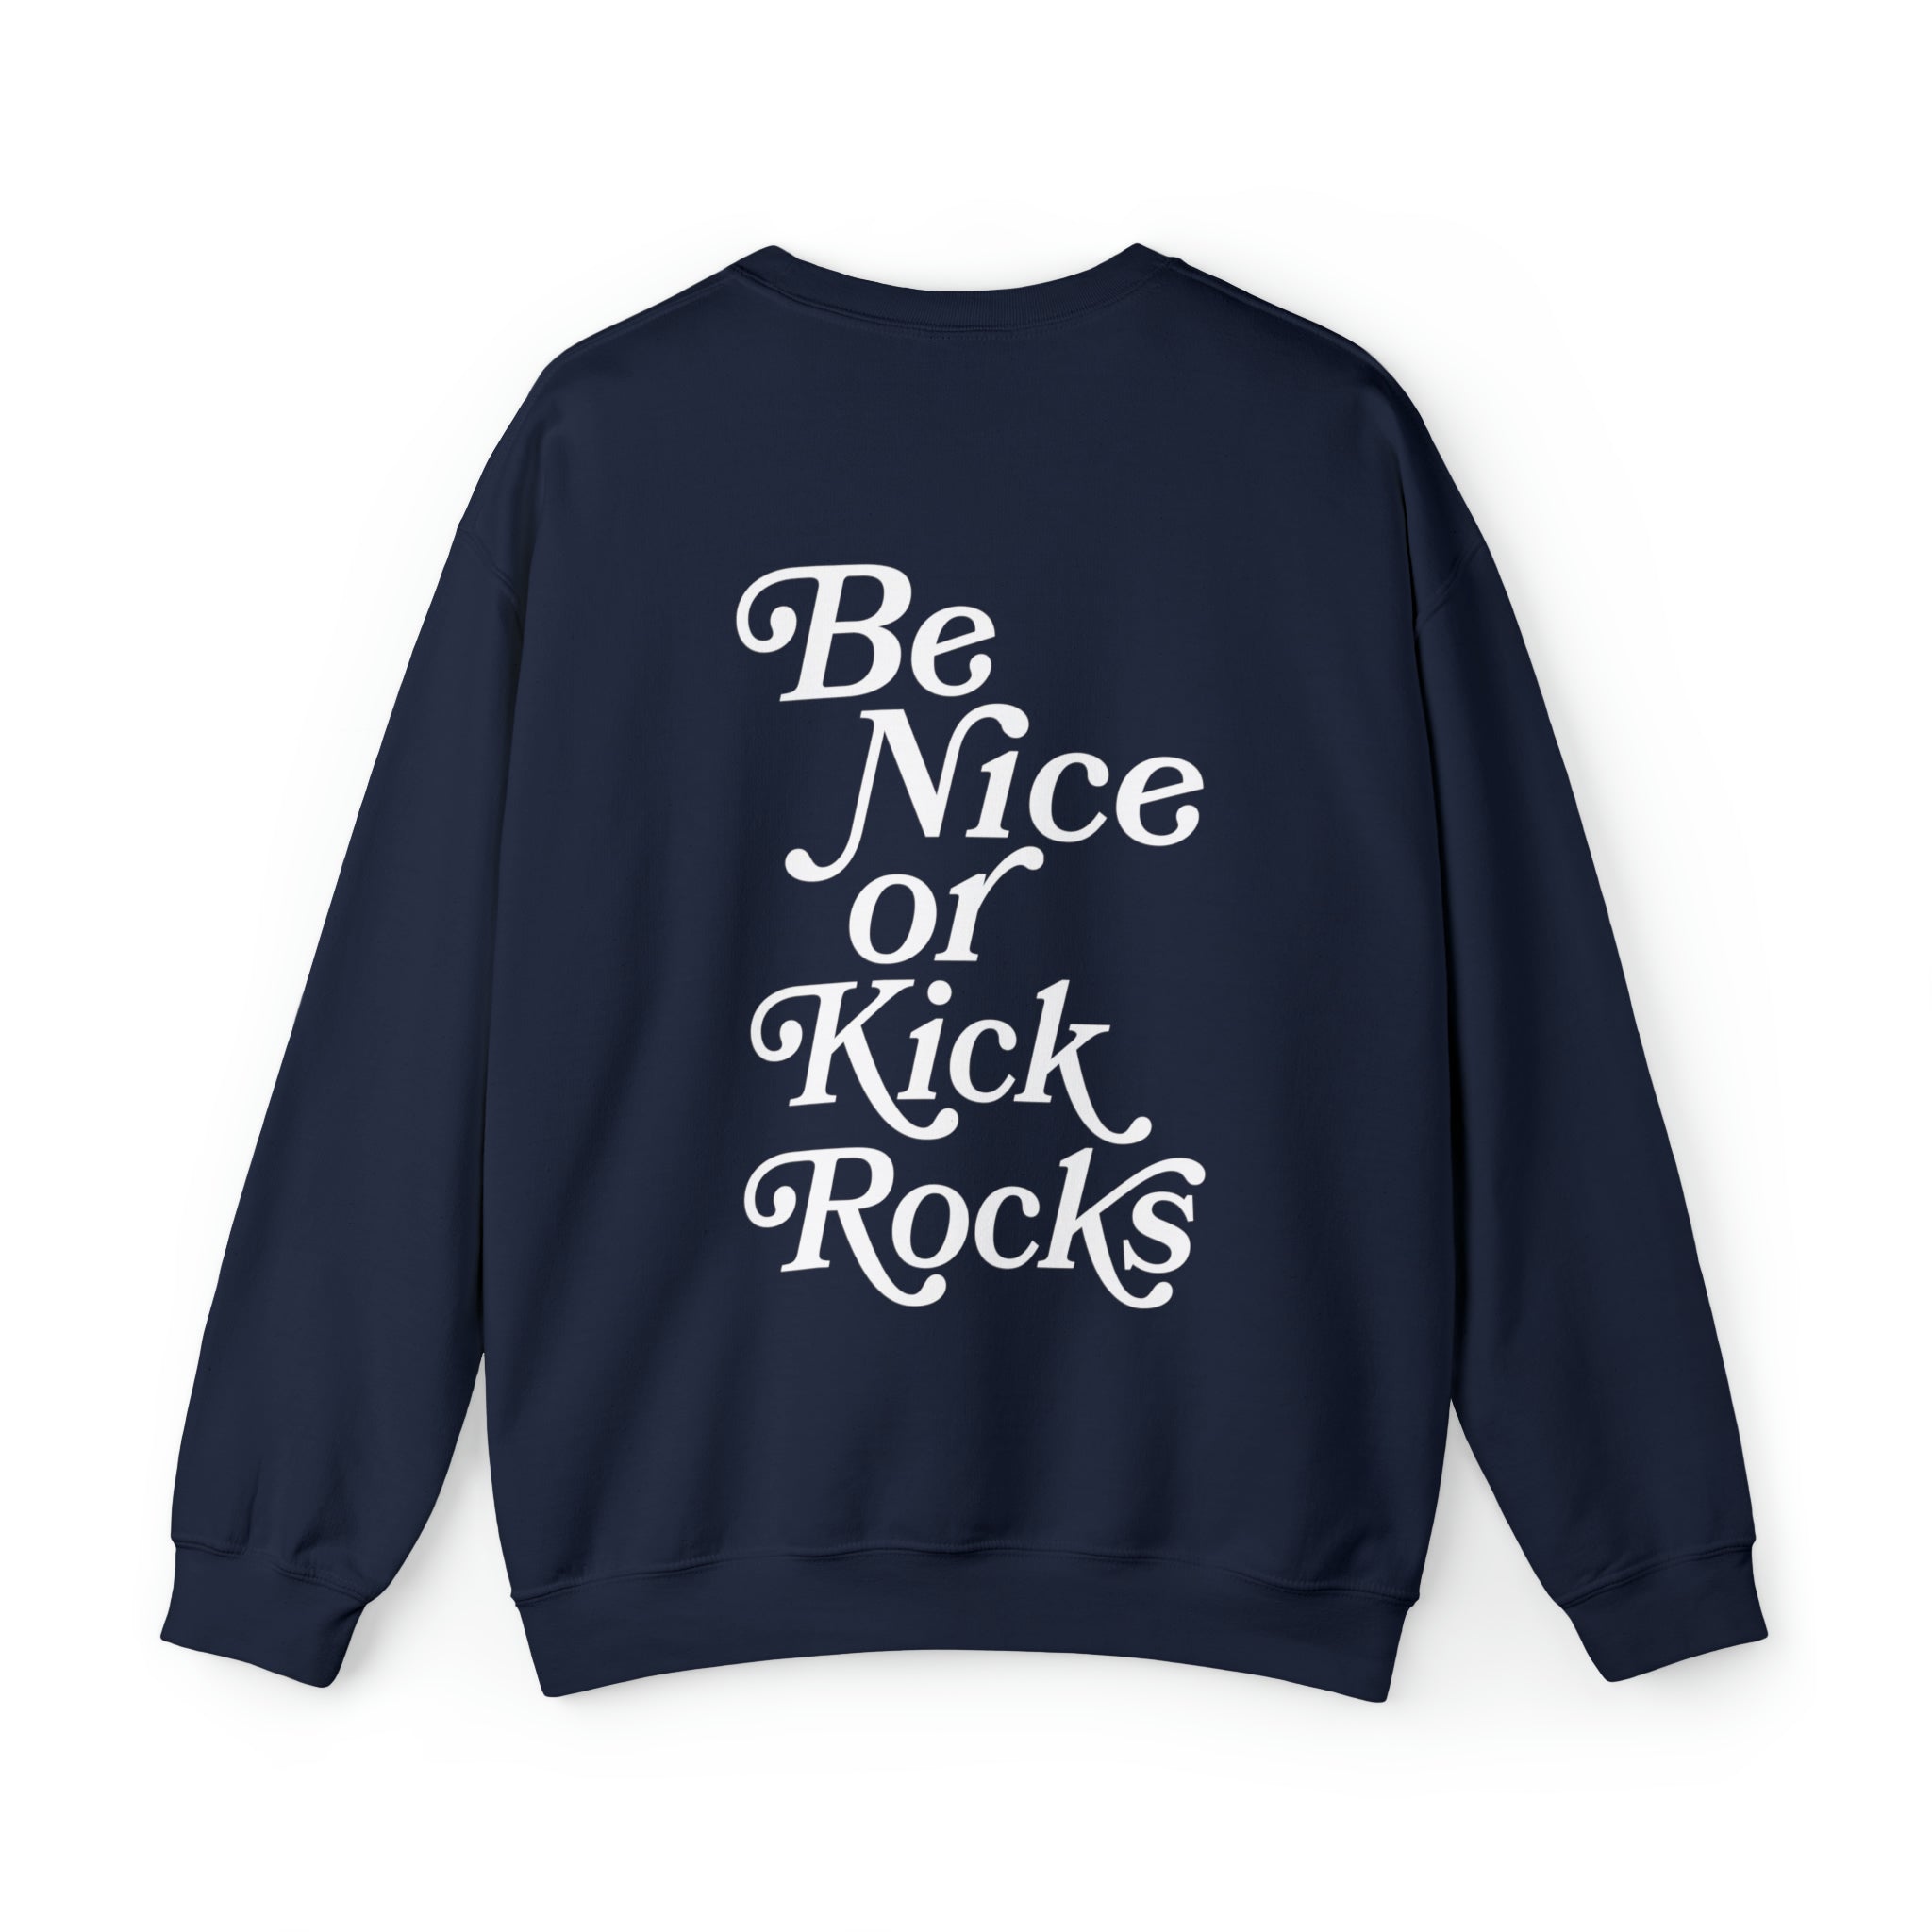 Bold Be Nice or Kick Rocks text on dark crewneck sweatshirt